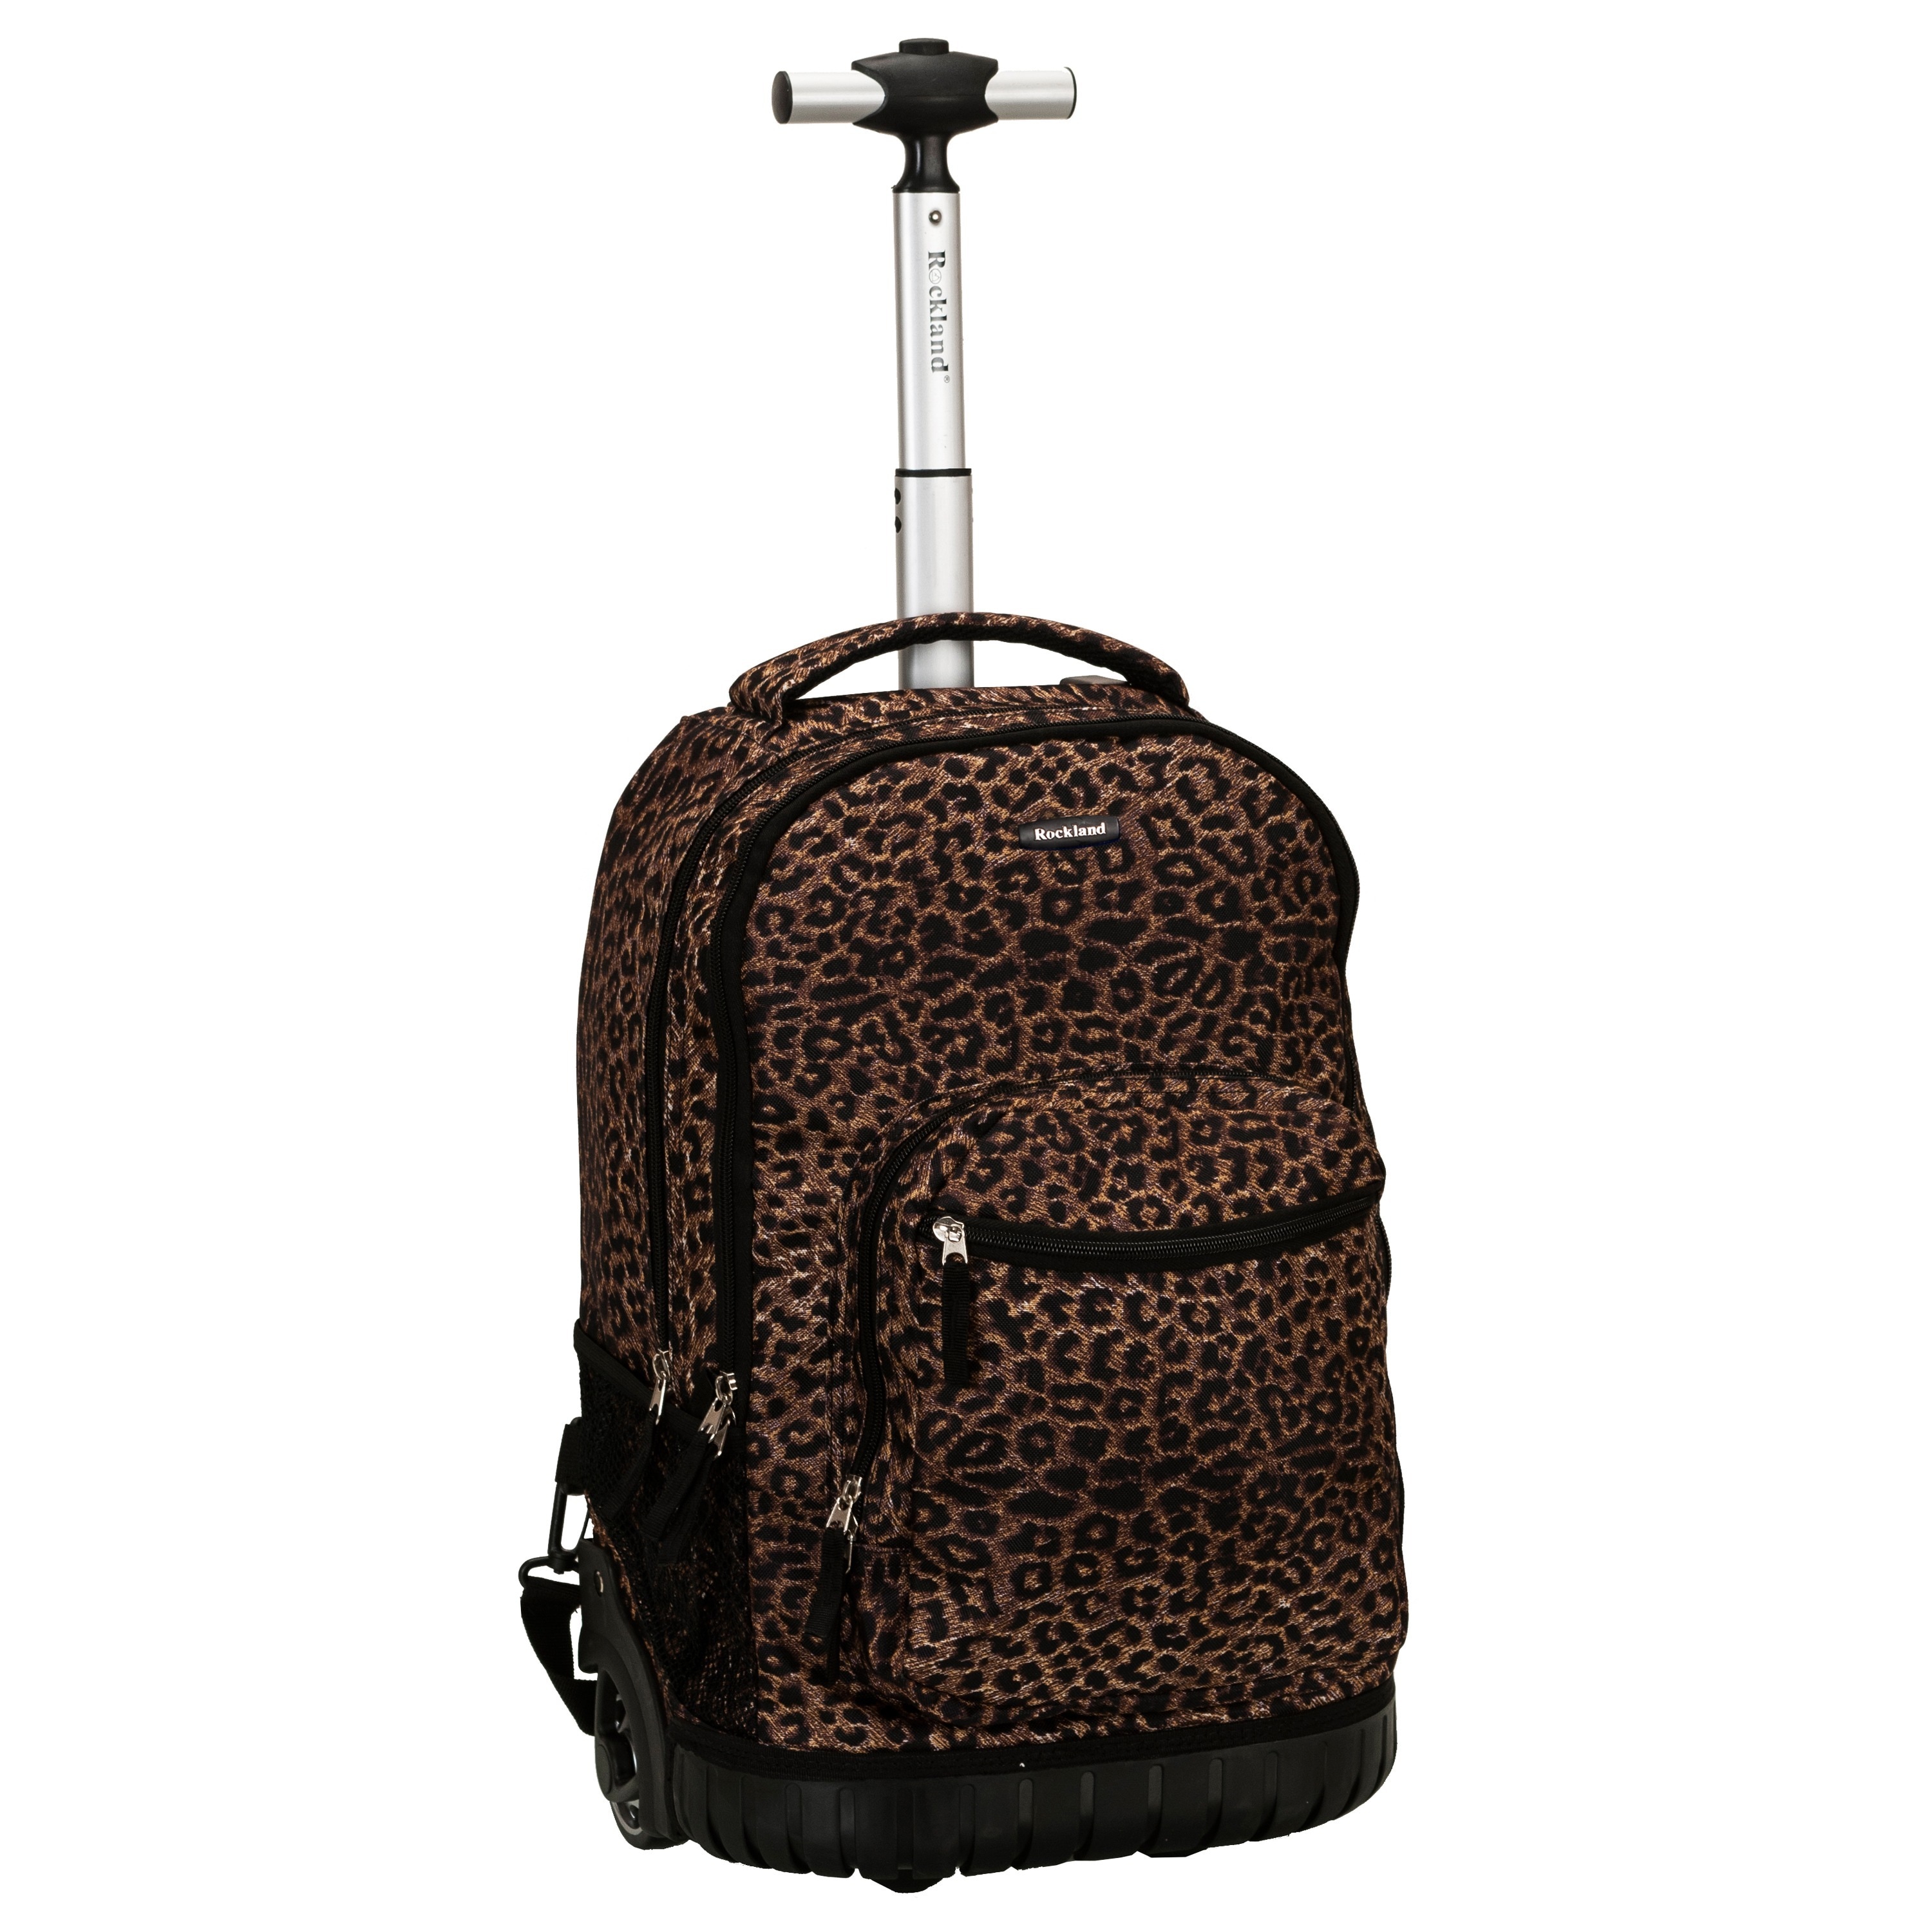 Rockland Leopard 18 inch Rolling Laptop Backpack